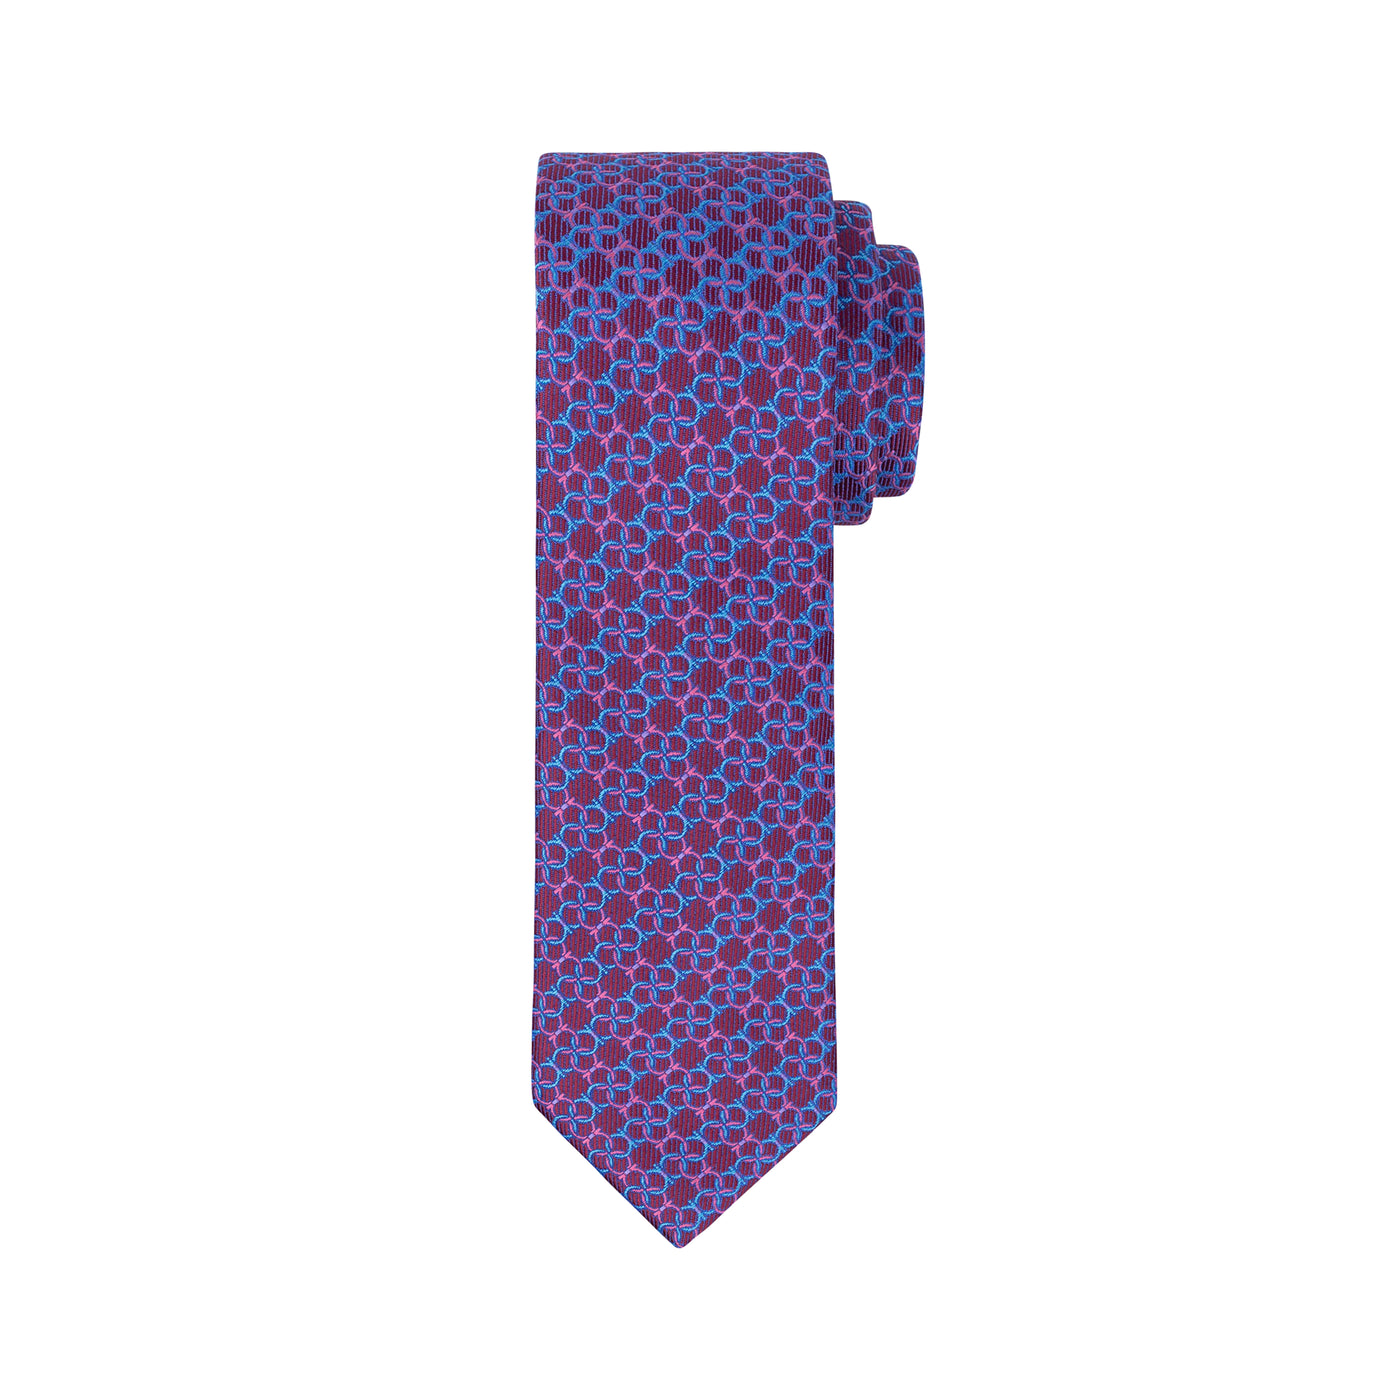 Chain Tie in Purple